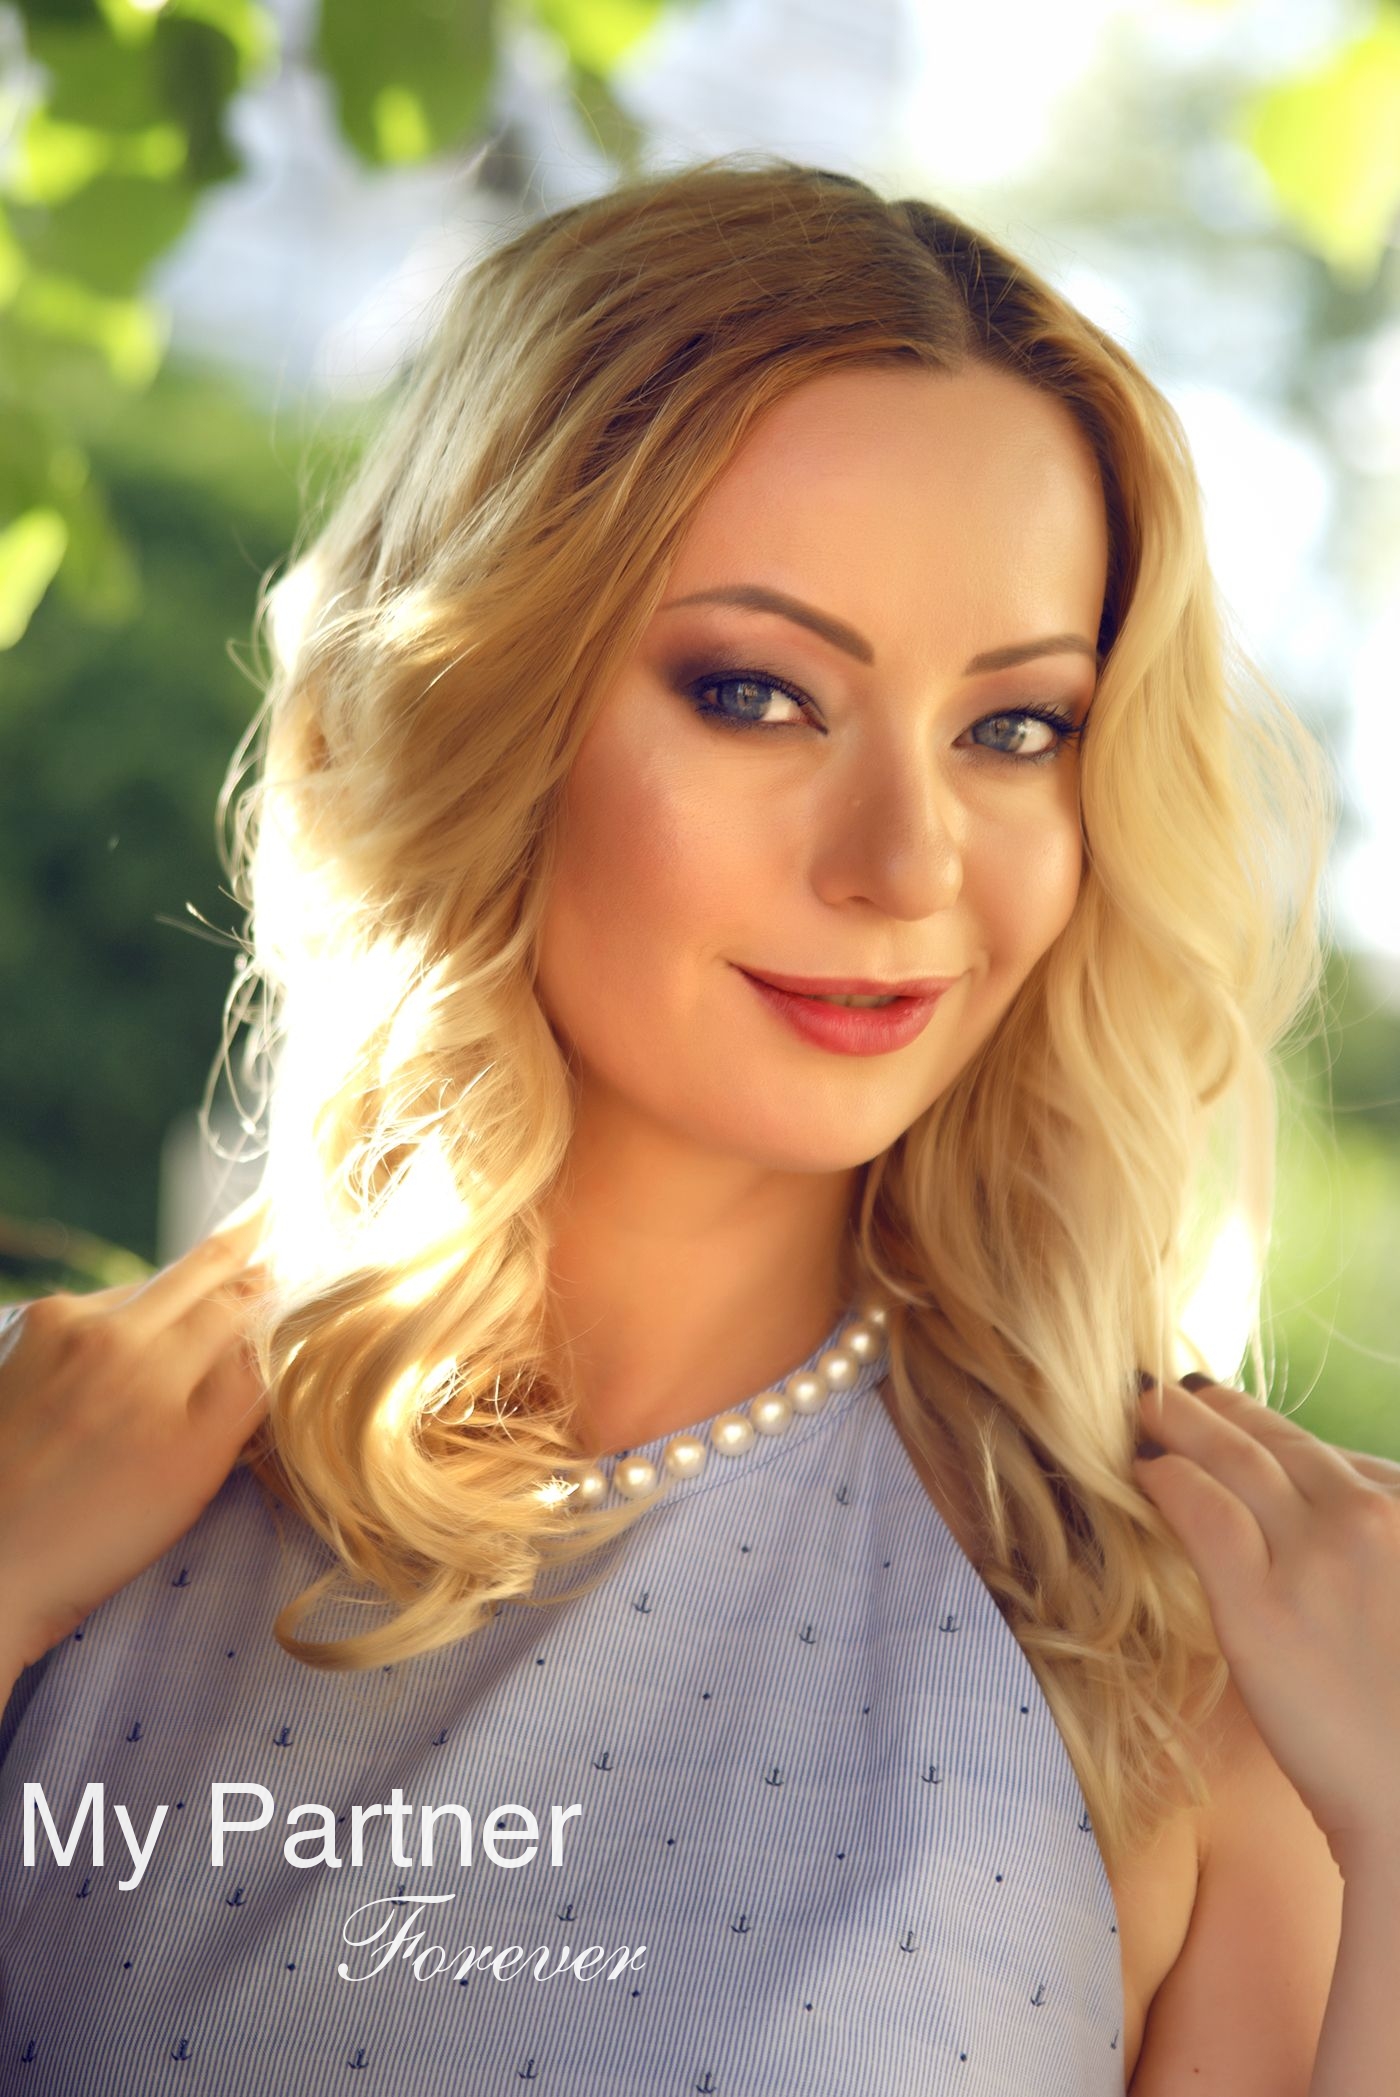 Datingsite to Meet Beautiful Ukrainian Girl Michele from Kiev, Ukraine